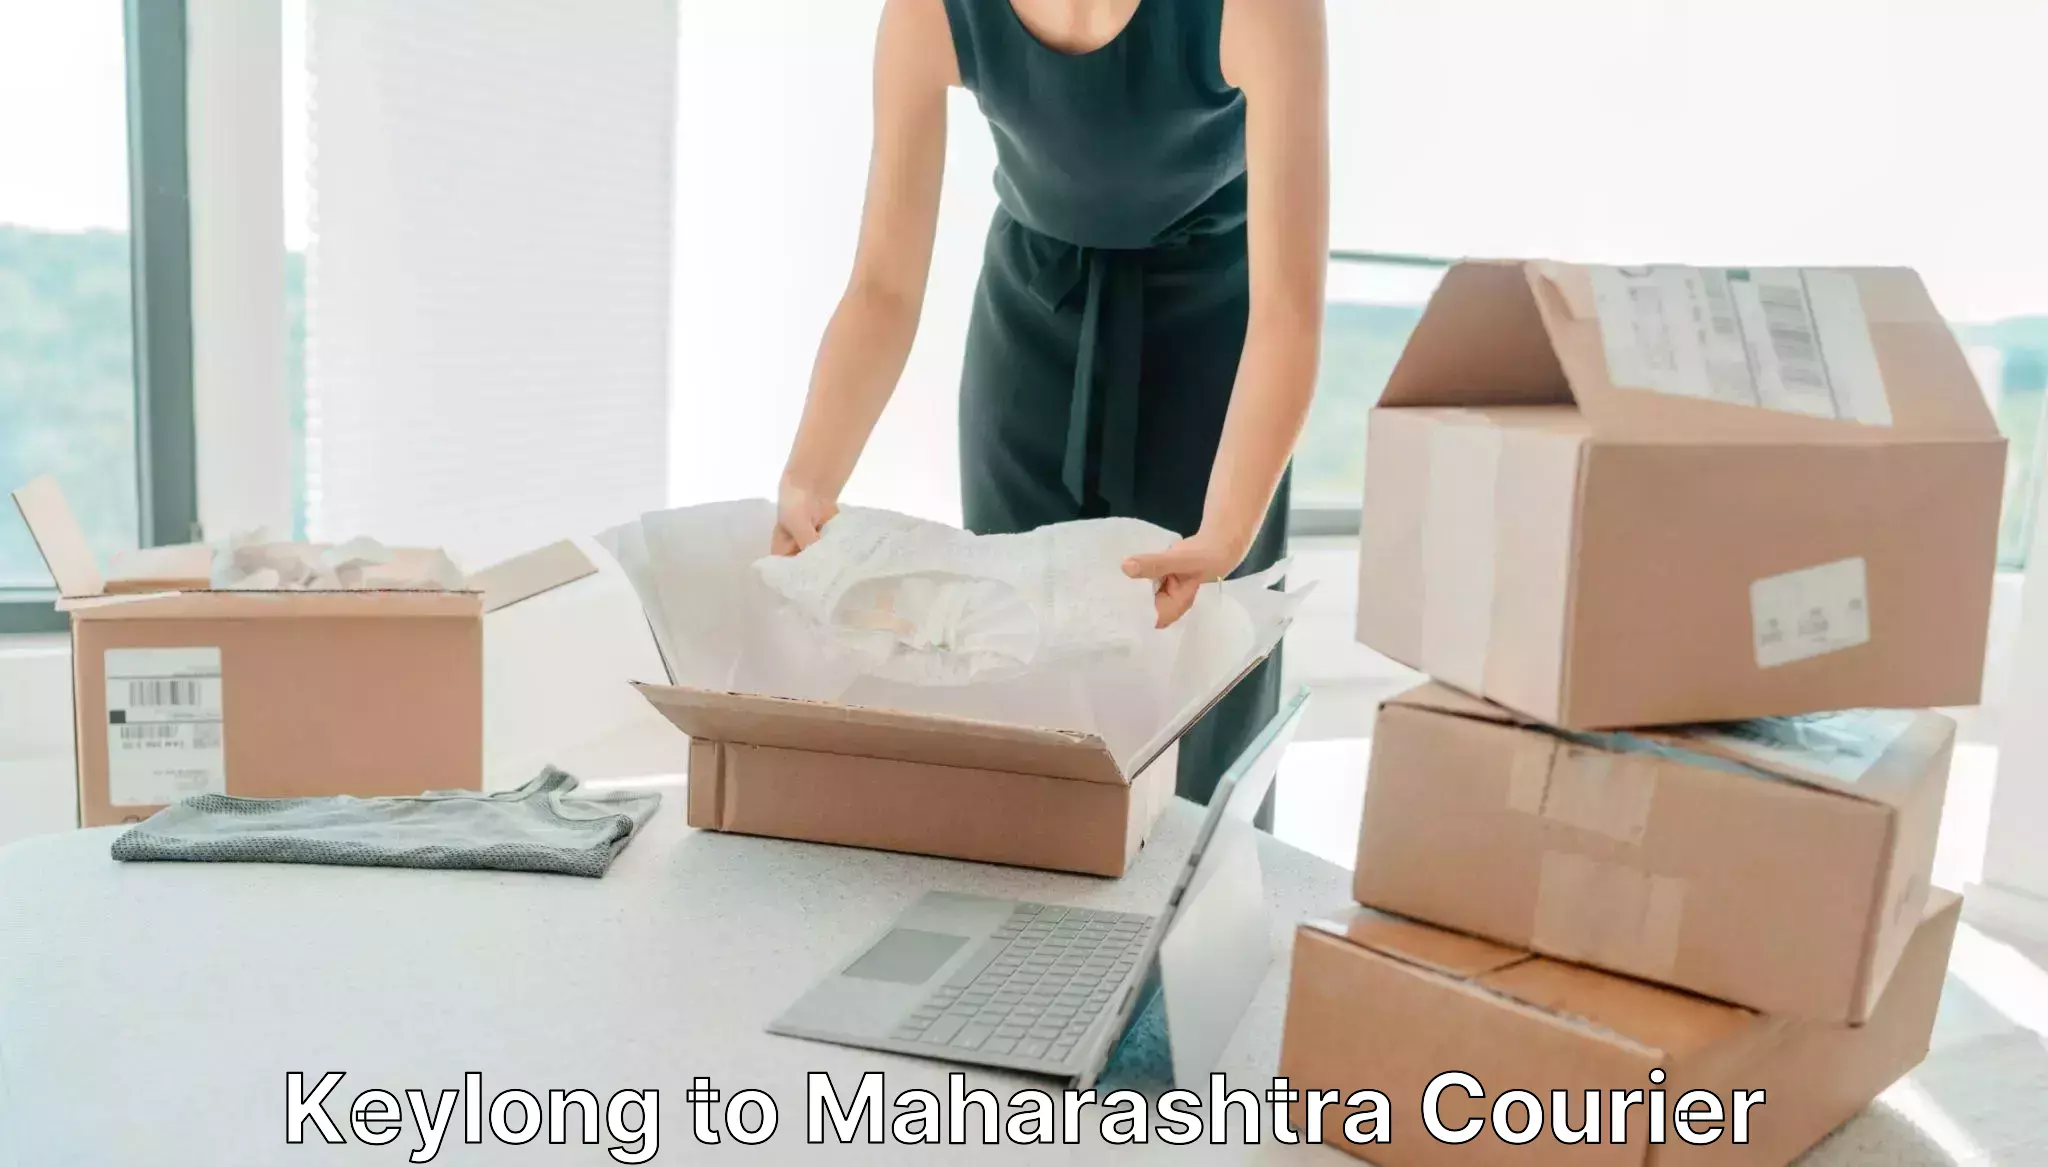 Fast delivery service Keylong to Mahabaleshwar